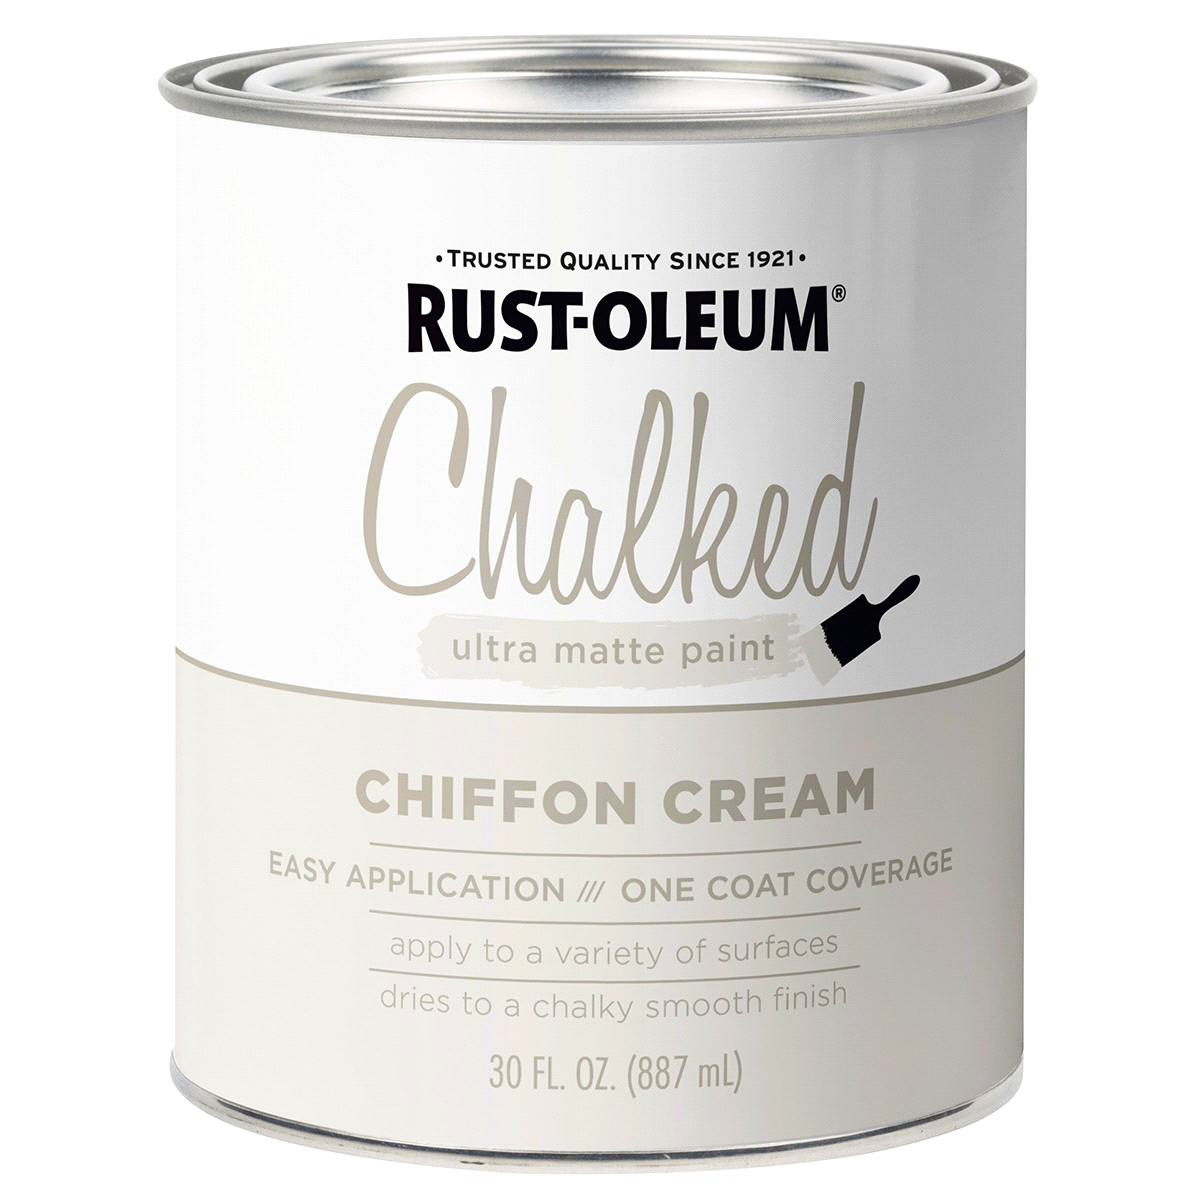 slide 1 of 1, Rust-Oleum Chalked Ultra Matte Paint 329598, Quart, Chiffon Cream, 1 ct